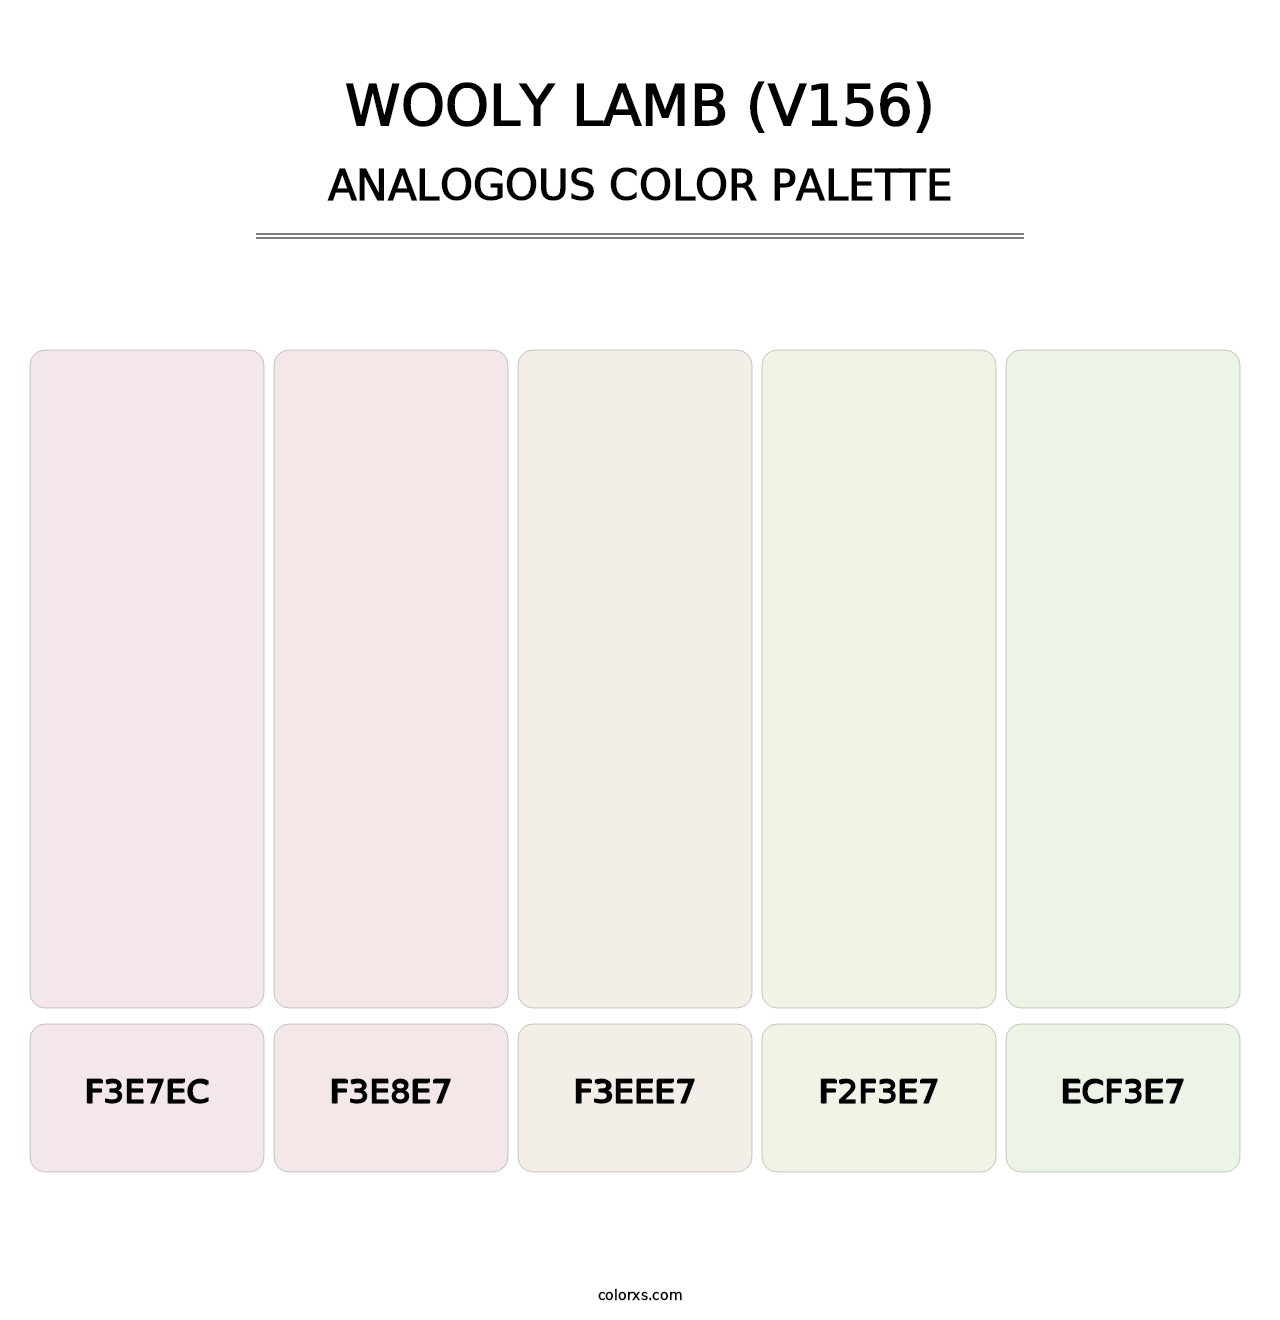 Wooly Lamb (V156) - Analogous Color Palette